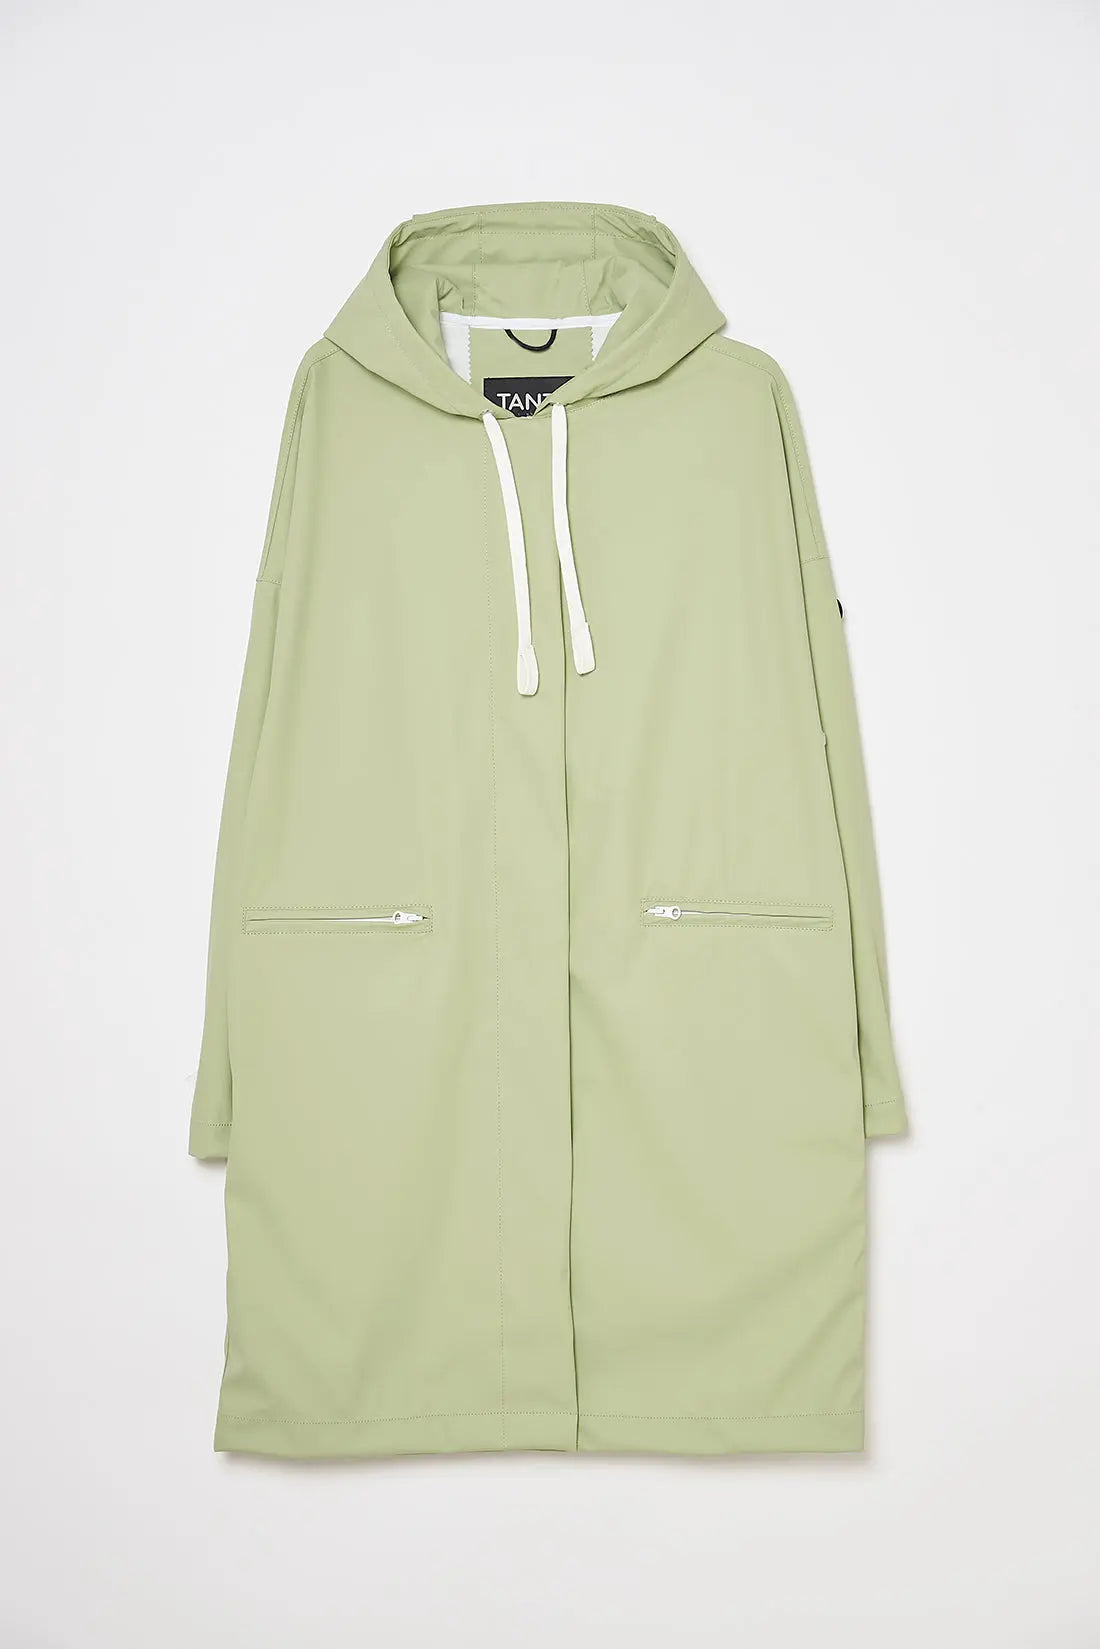 Tantä. Chubasquero o chaqueta Impermeable de Mujer – Rainwear